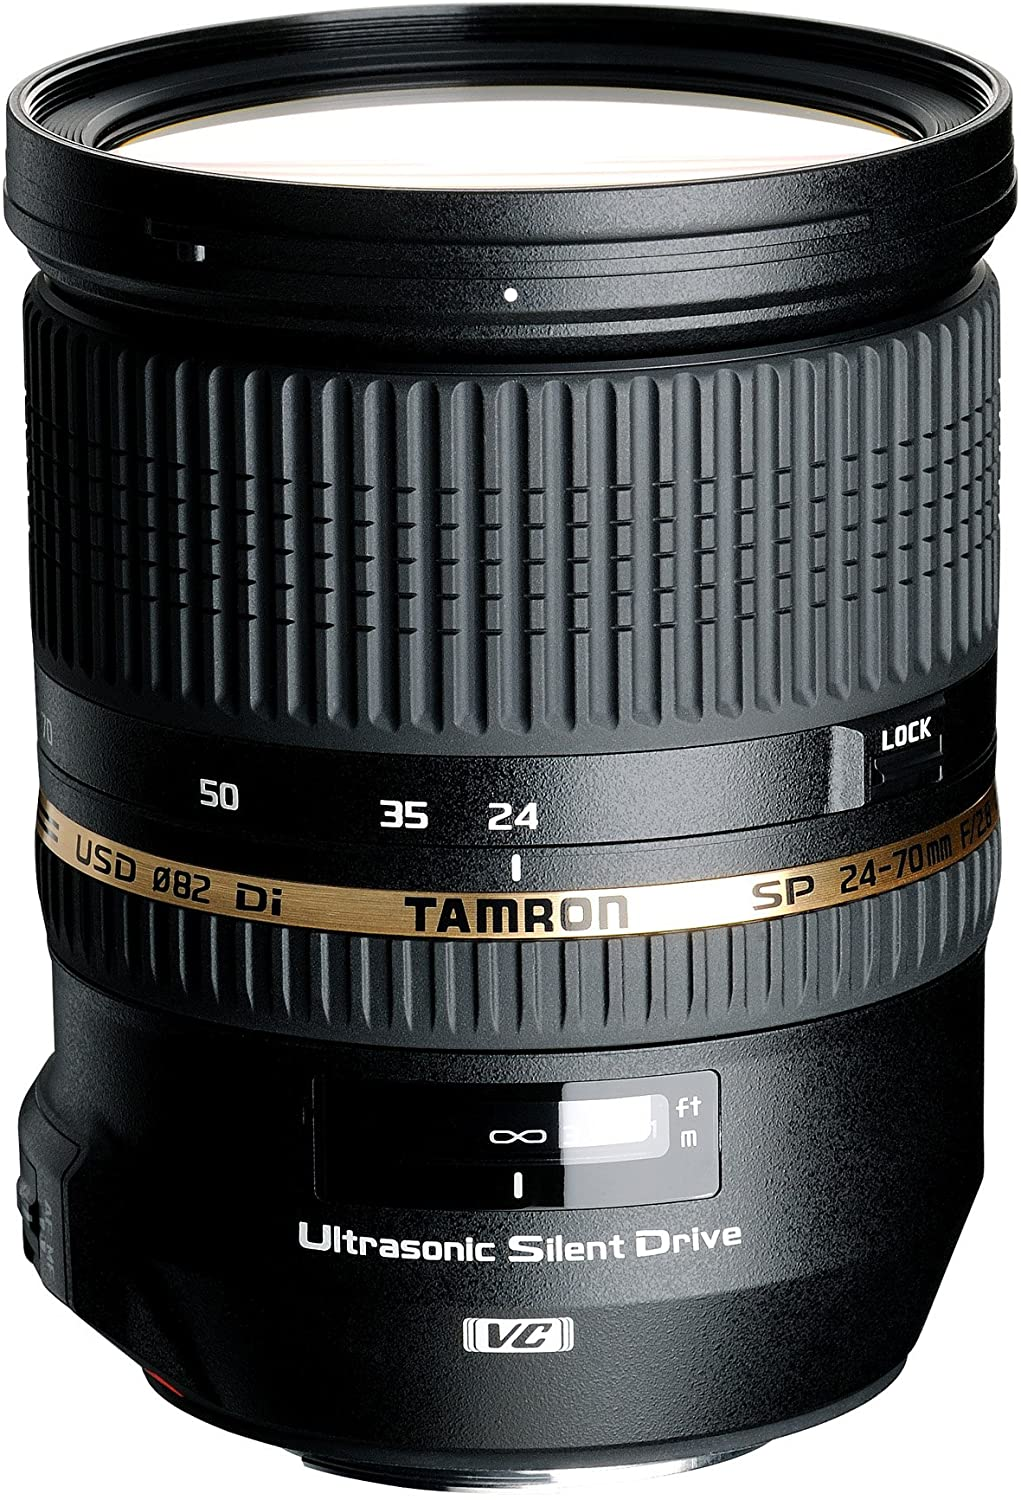 Tamron SP 24-70mm F2.8 Di VC USD Lens For Canon